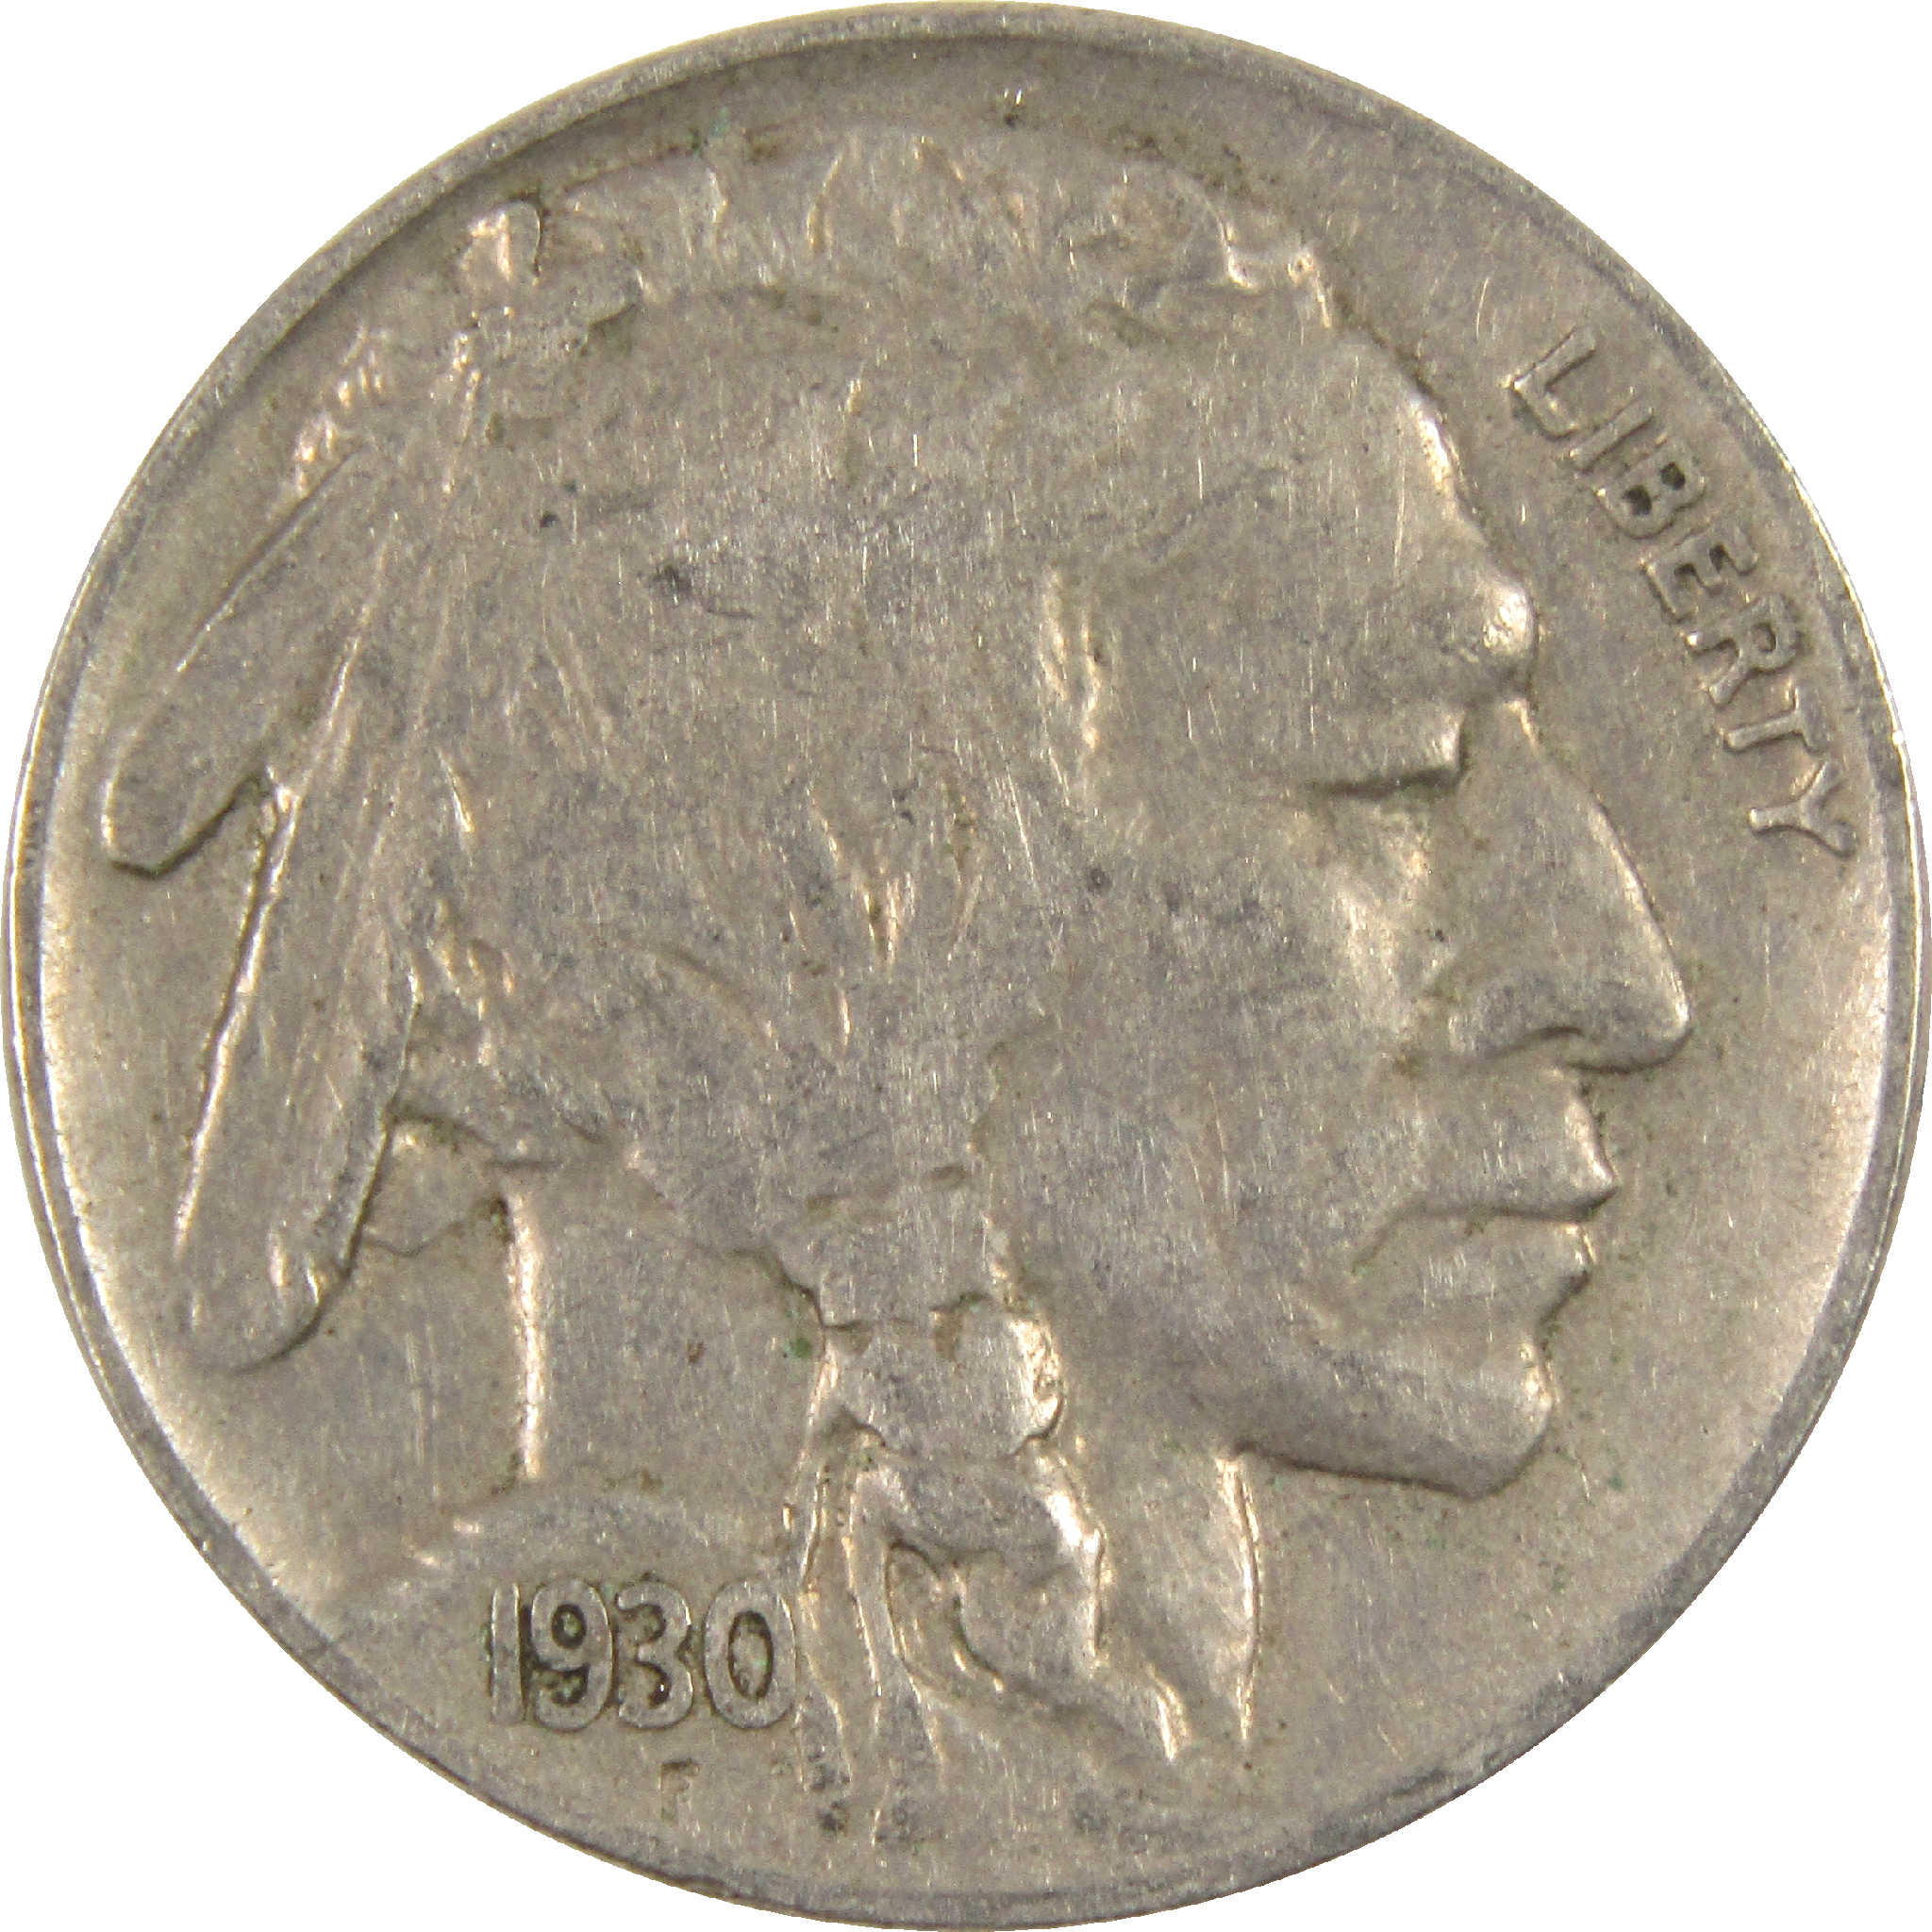 1930 Indian Head Buffalo Nickel VF Very Fine 5c Coin